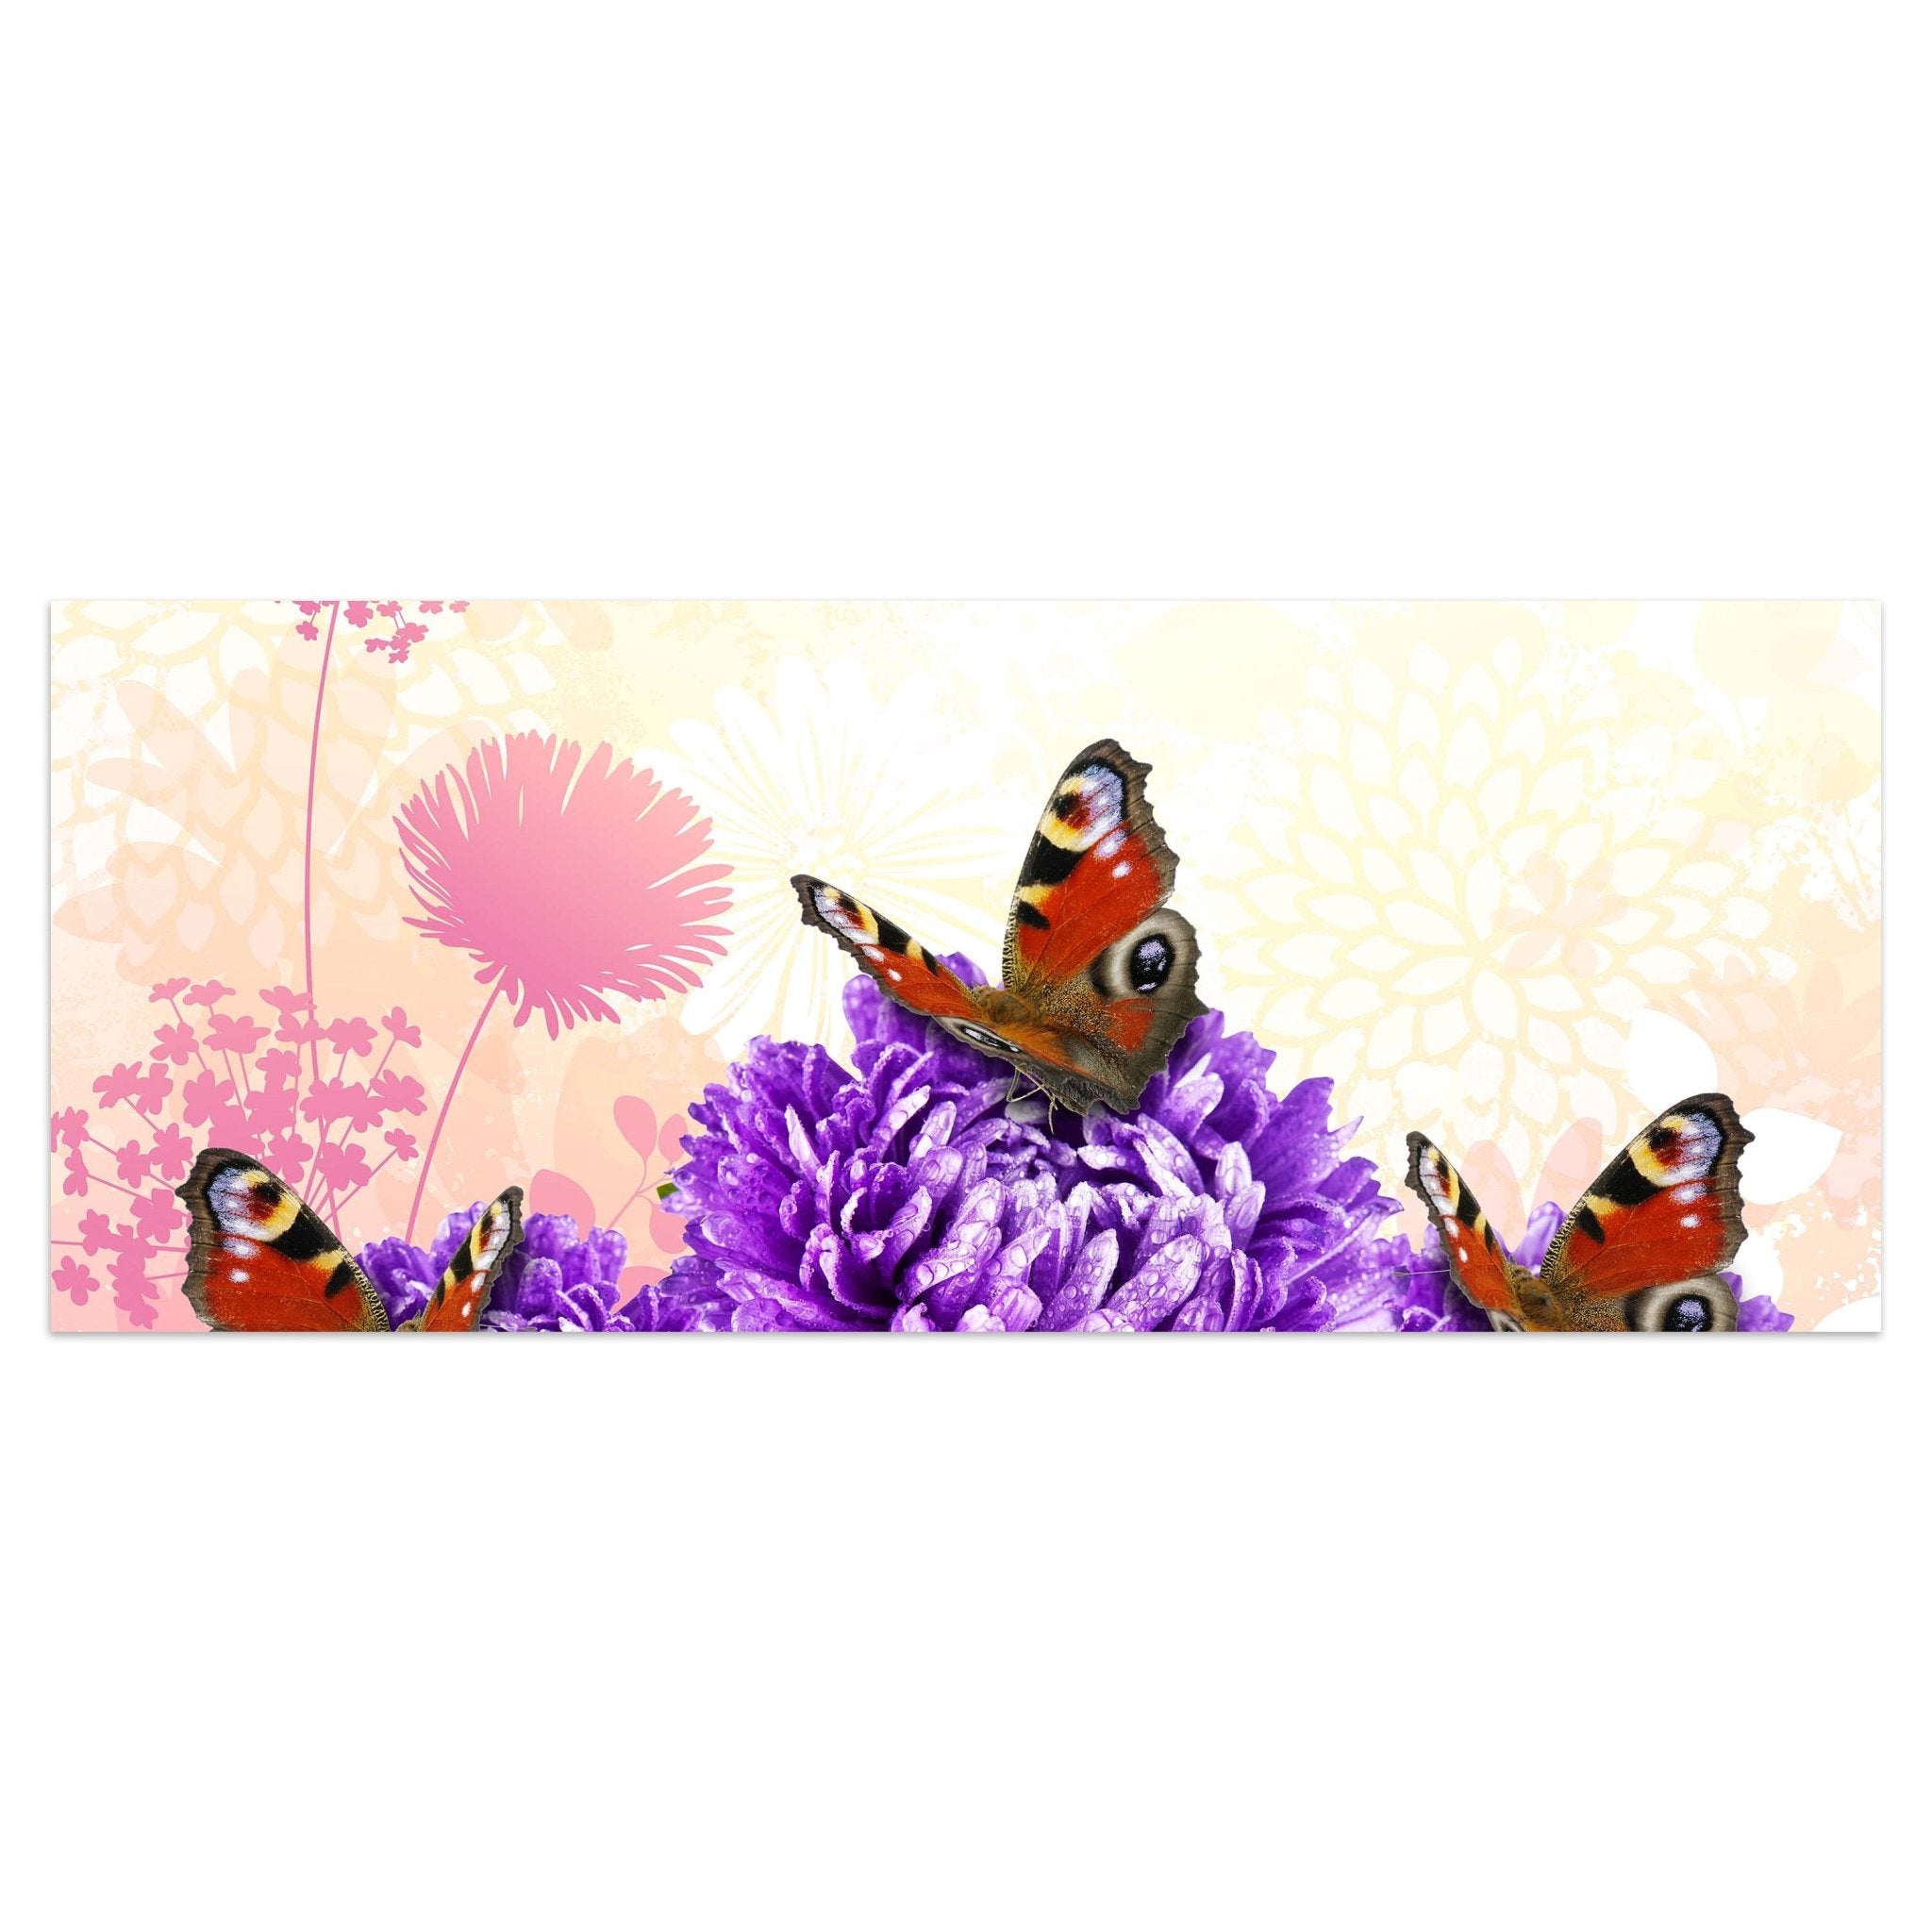 Leinwandbild Schmetterlinge M0579 kaufen - Bild 1